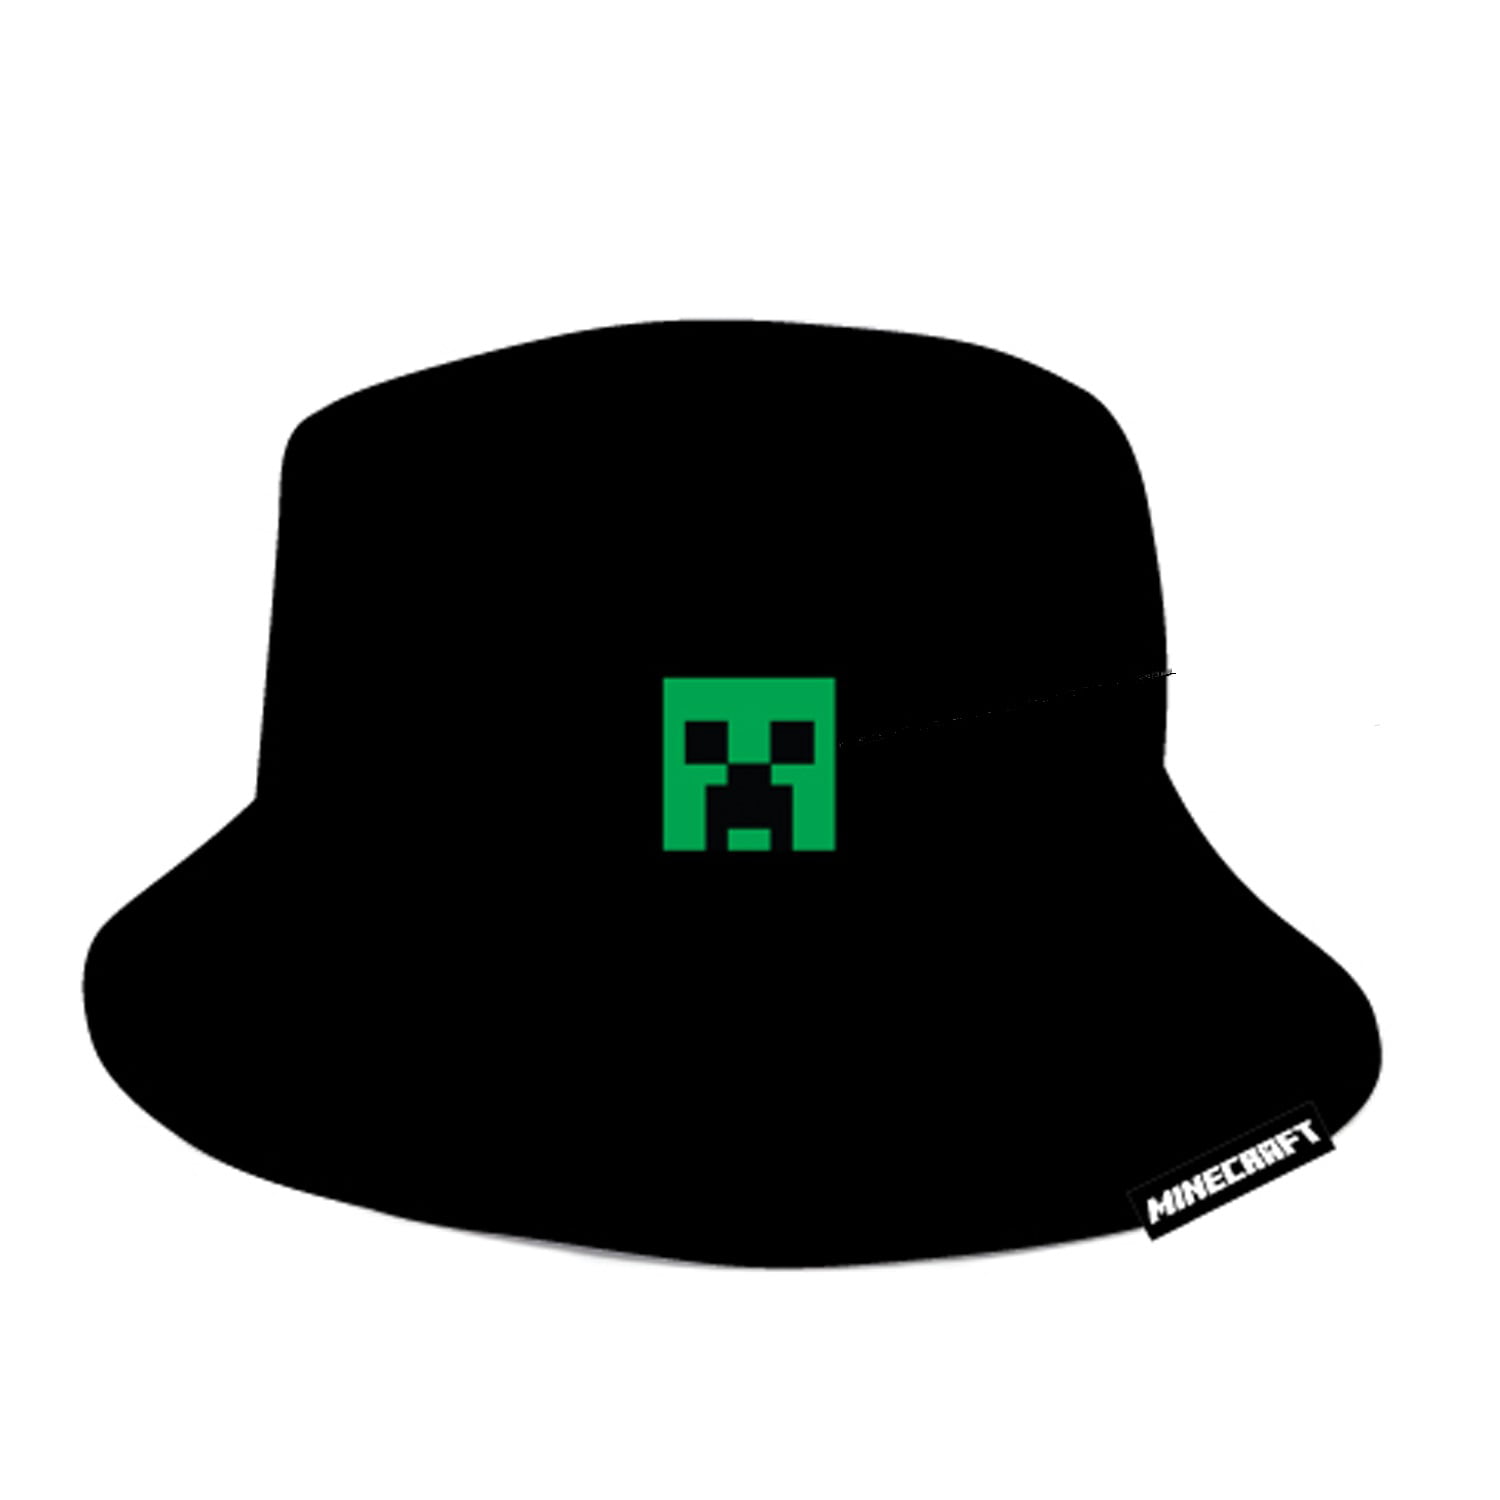 Шляпа майнкрафт. Шлёпа из ма. Ковбойская шляпа майнкрафт. Шляпы на скинах в Майне. Minecraft hats